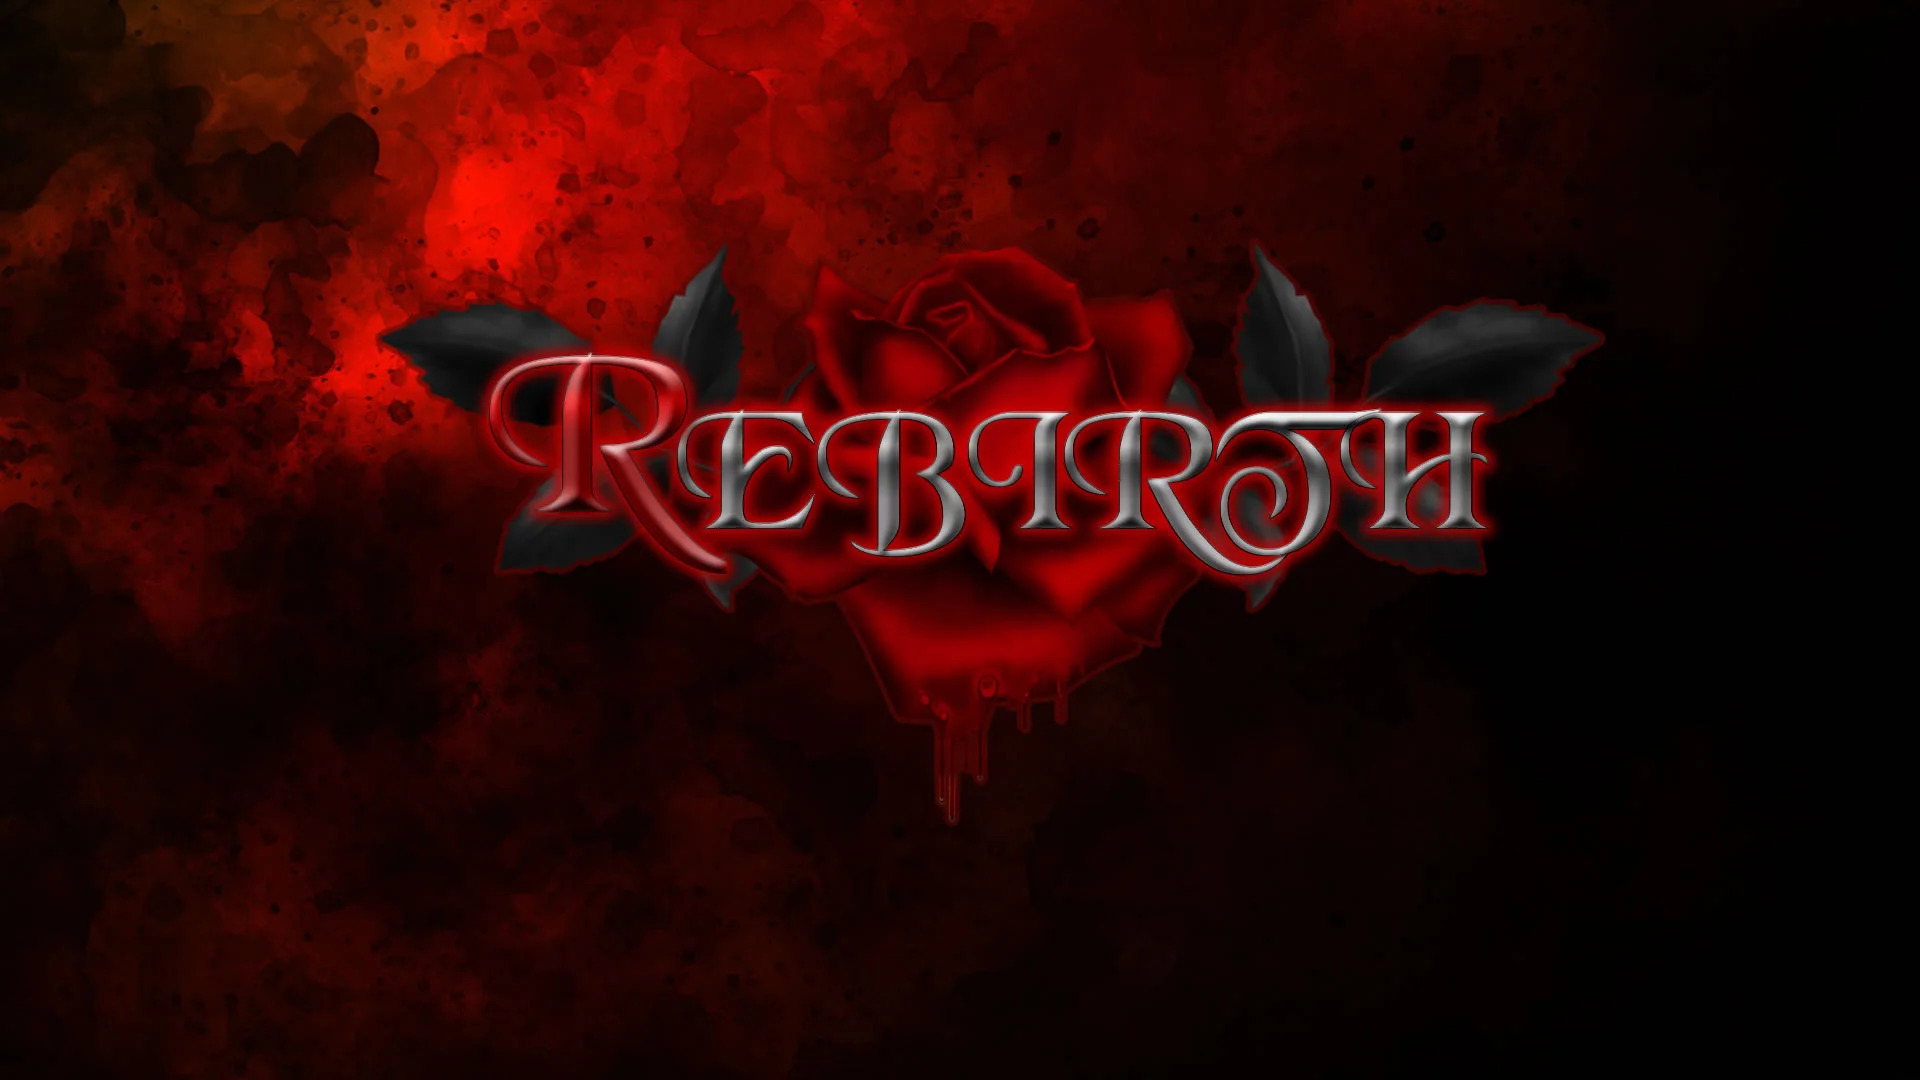 Rebirth main image